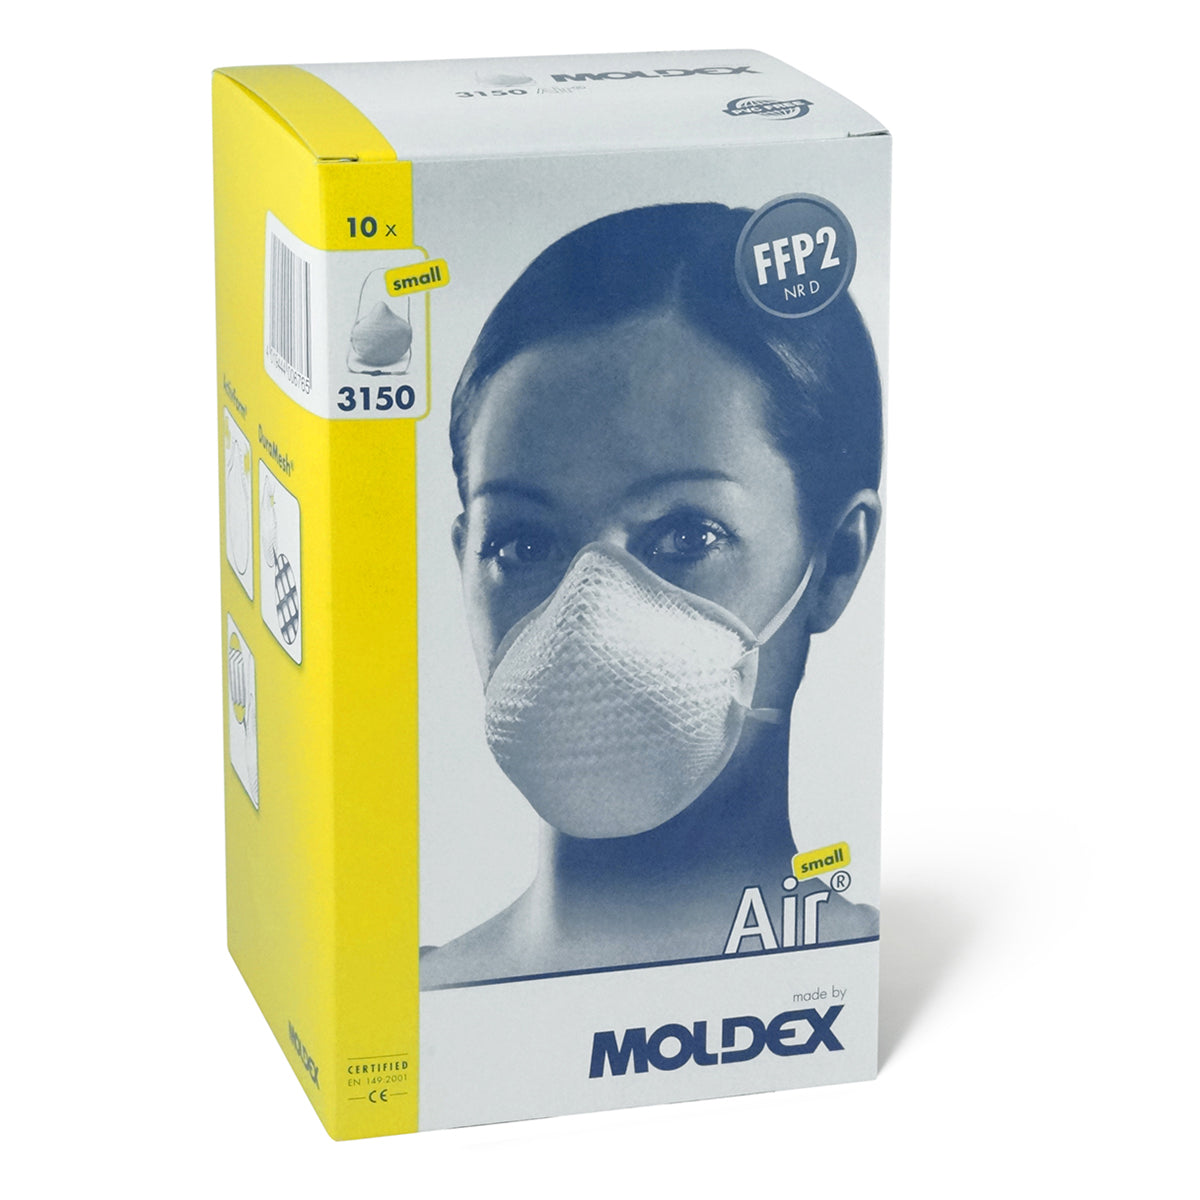 Moldex 3150 Air FFP2 NR D Masks Size Small